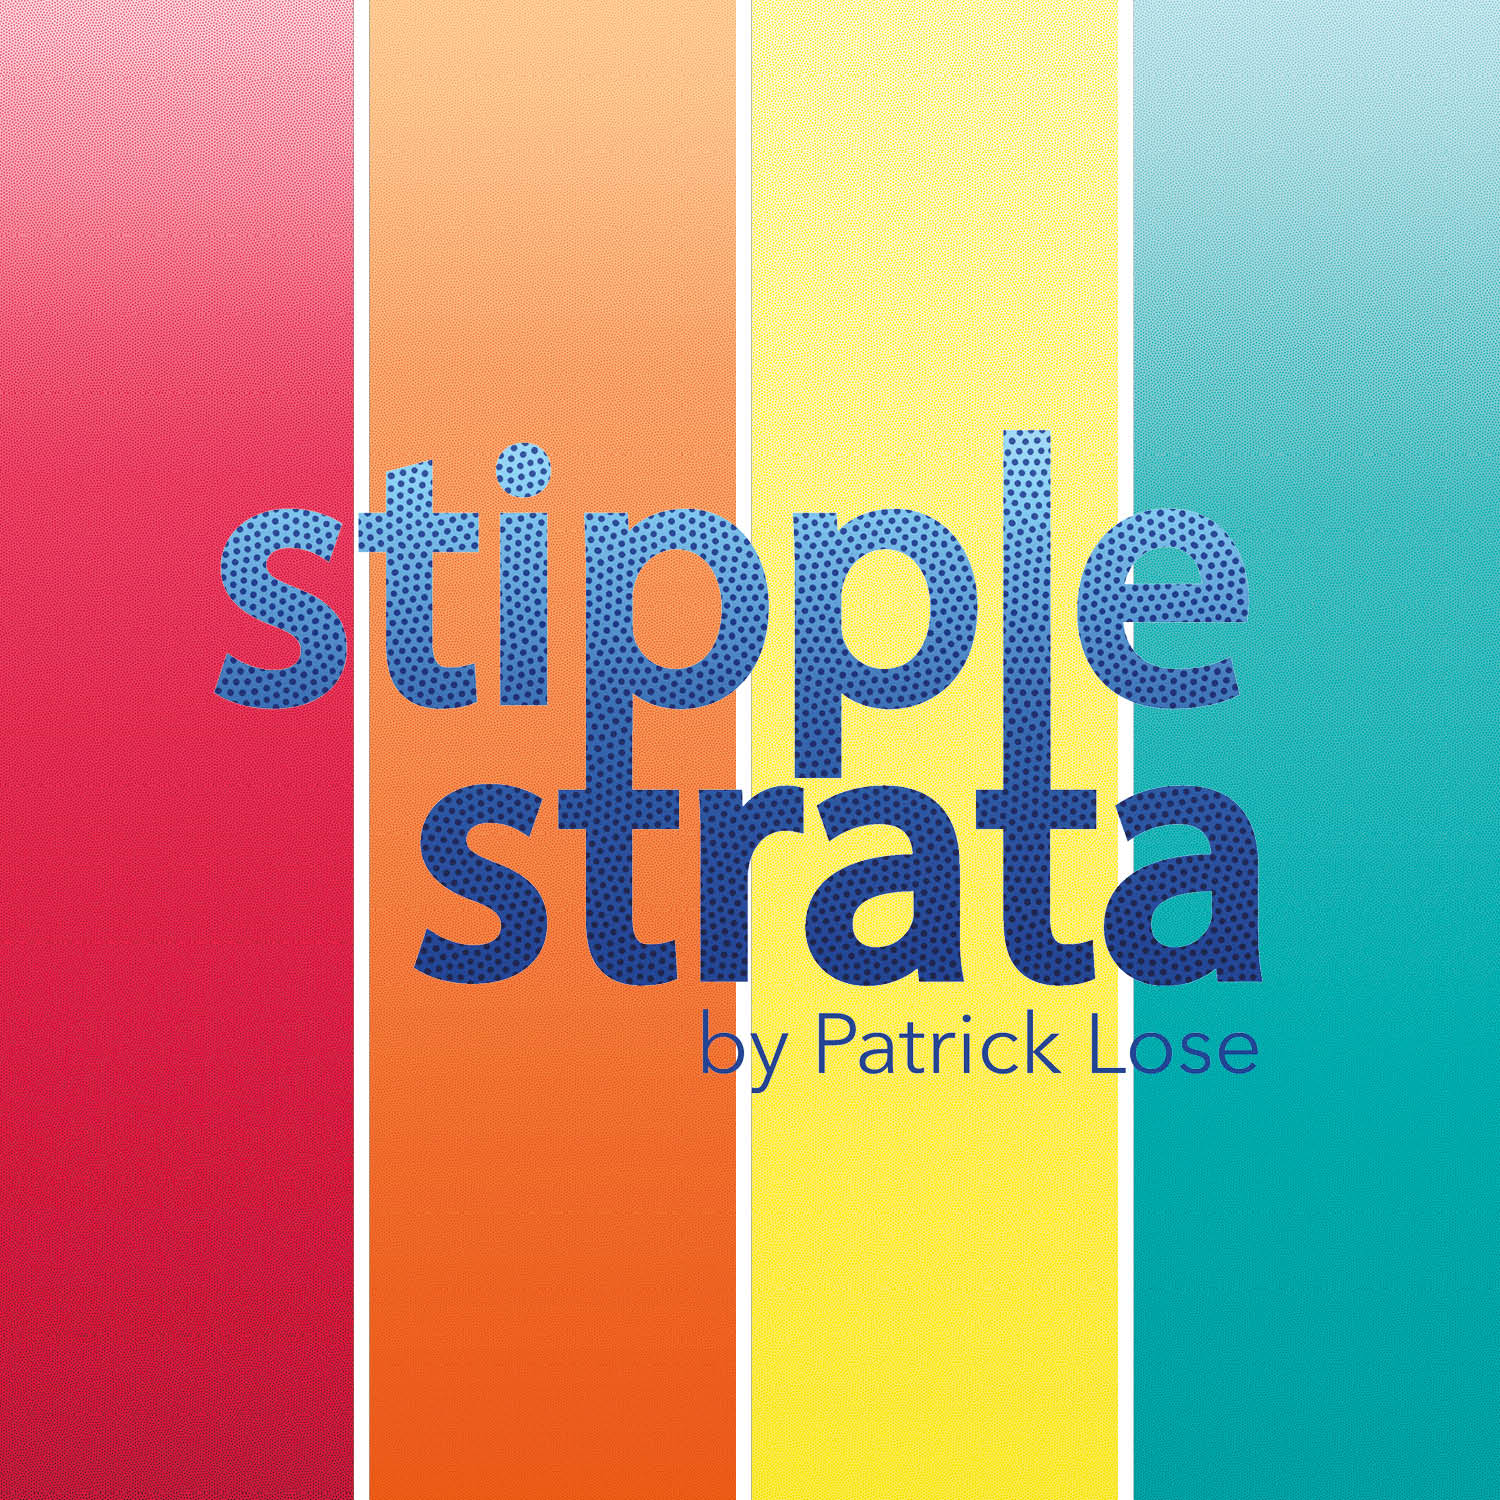 Stipple Strata by Patrick Lose